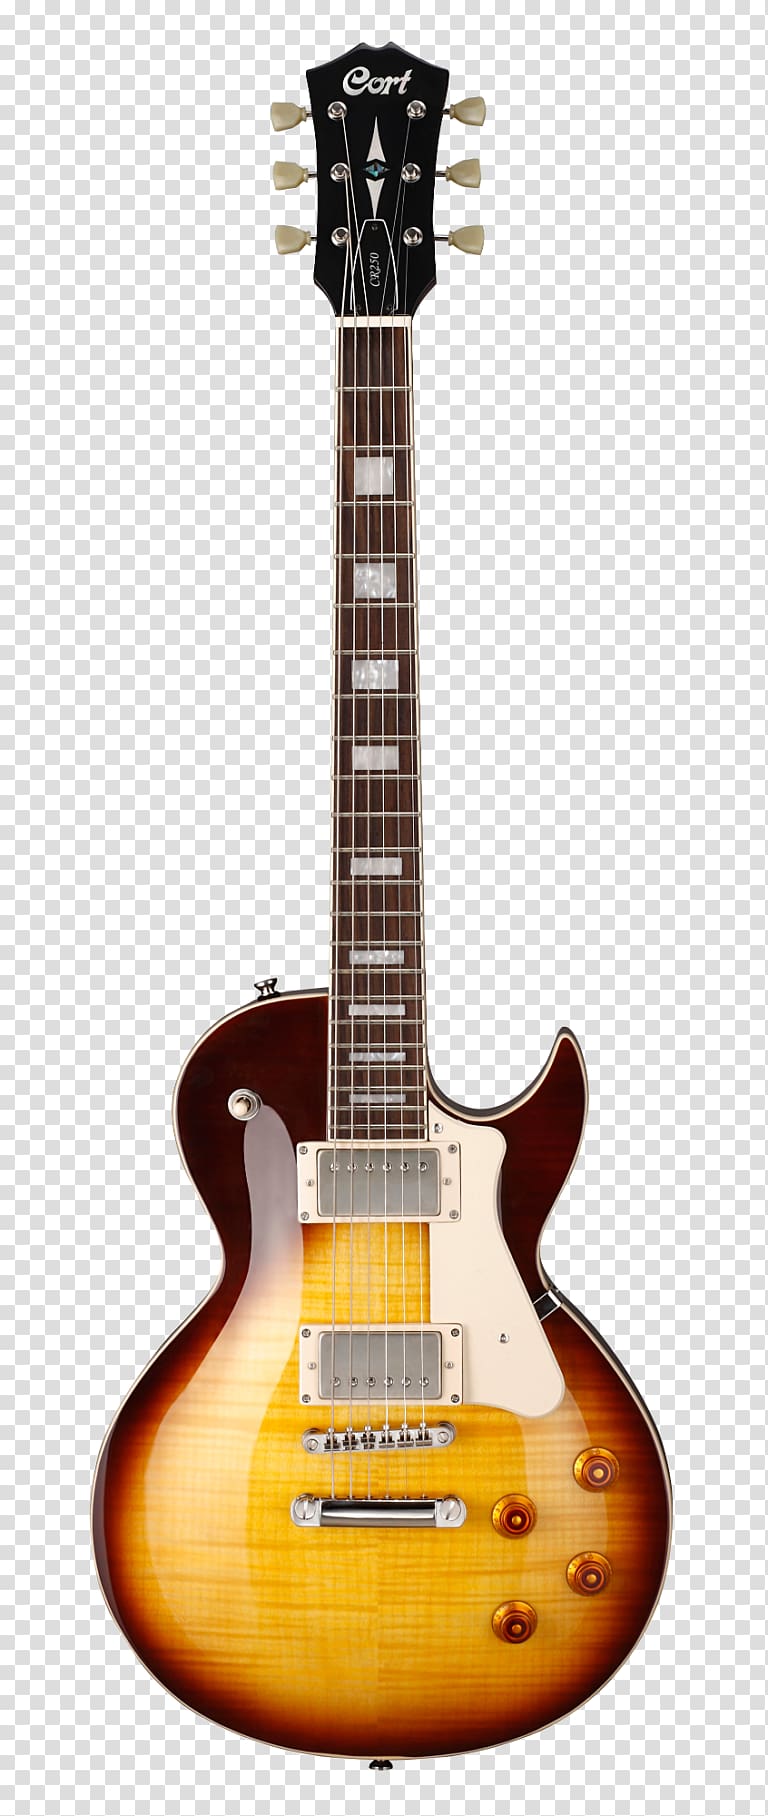 Gibson Les Paul Cutaway Cort Guitars Electric guitar Music, electric guitar transparent background PNG clipart